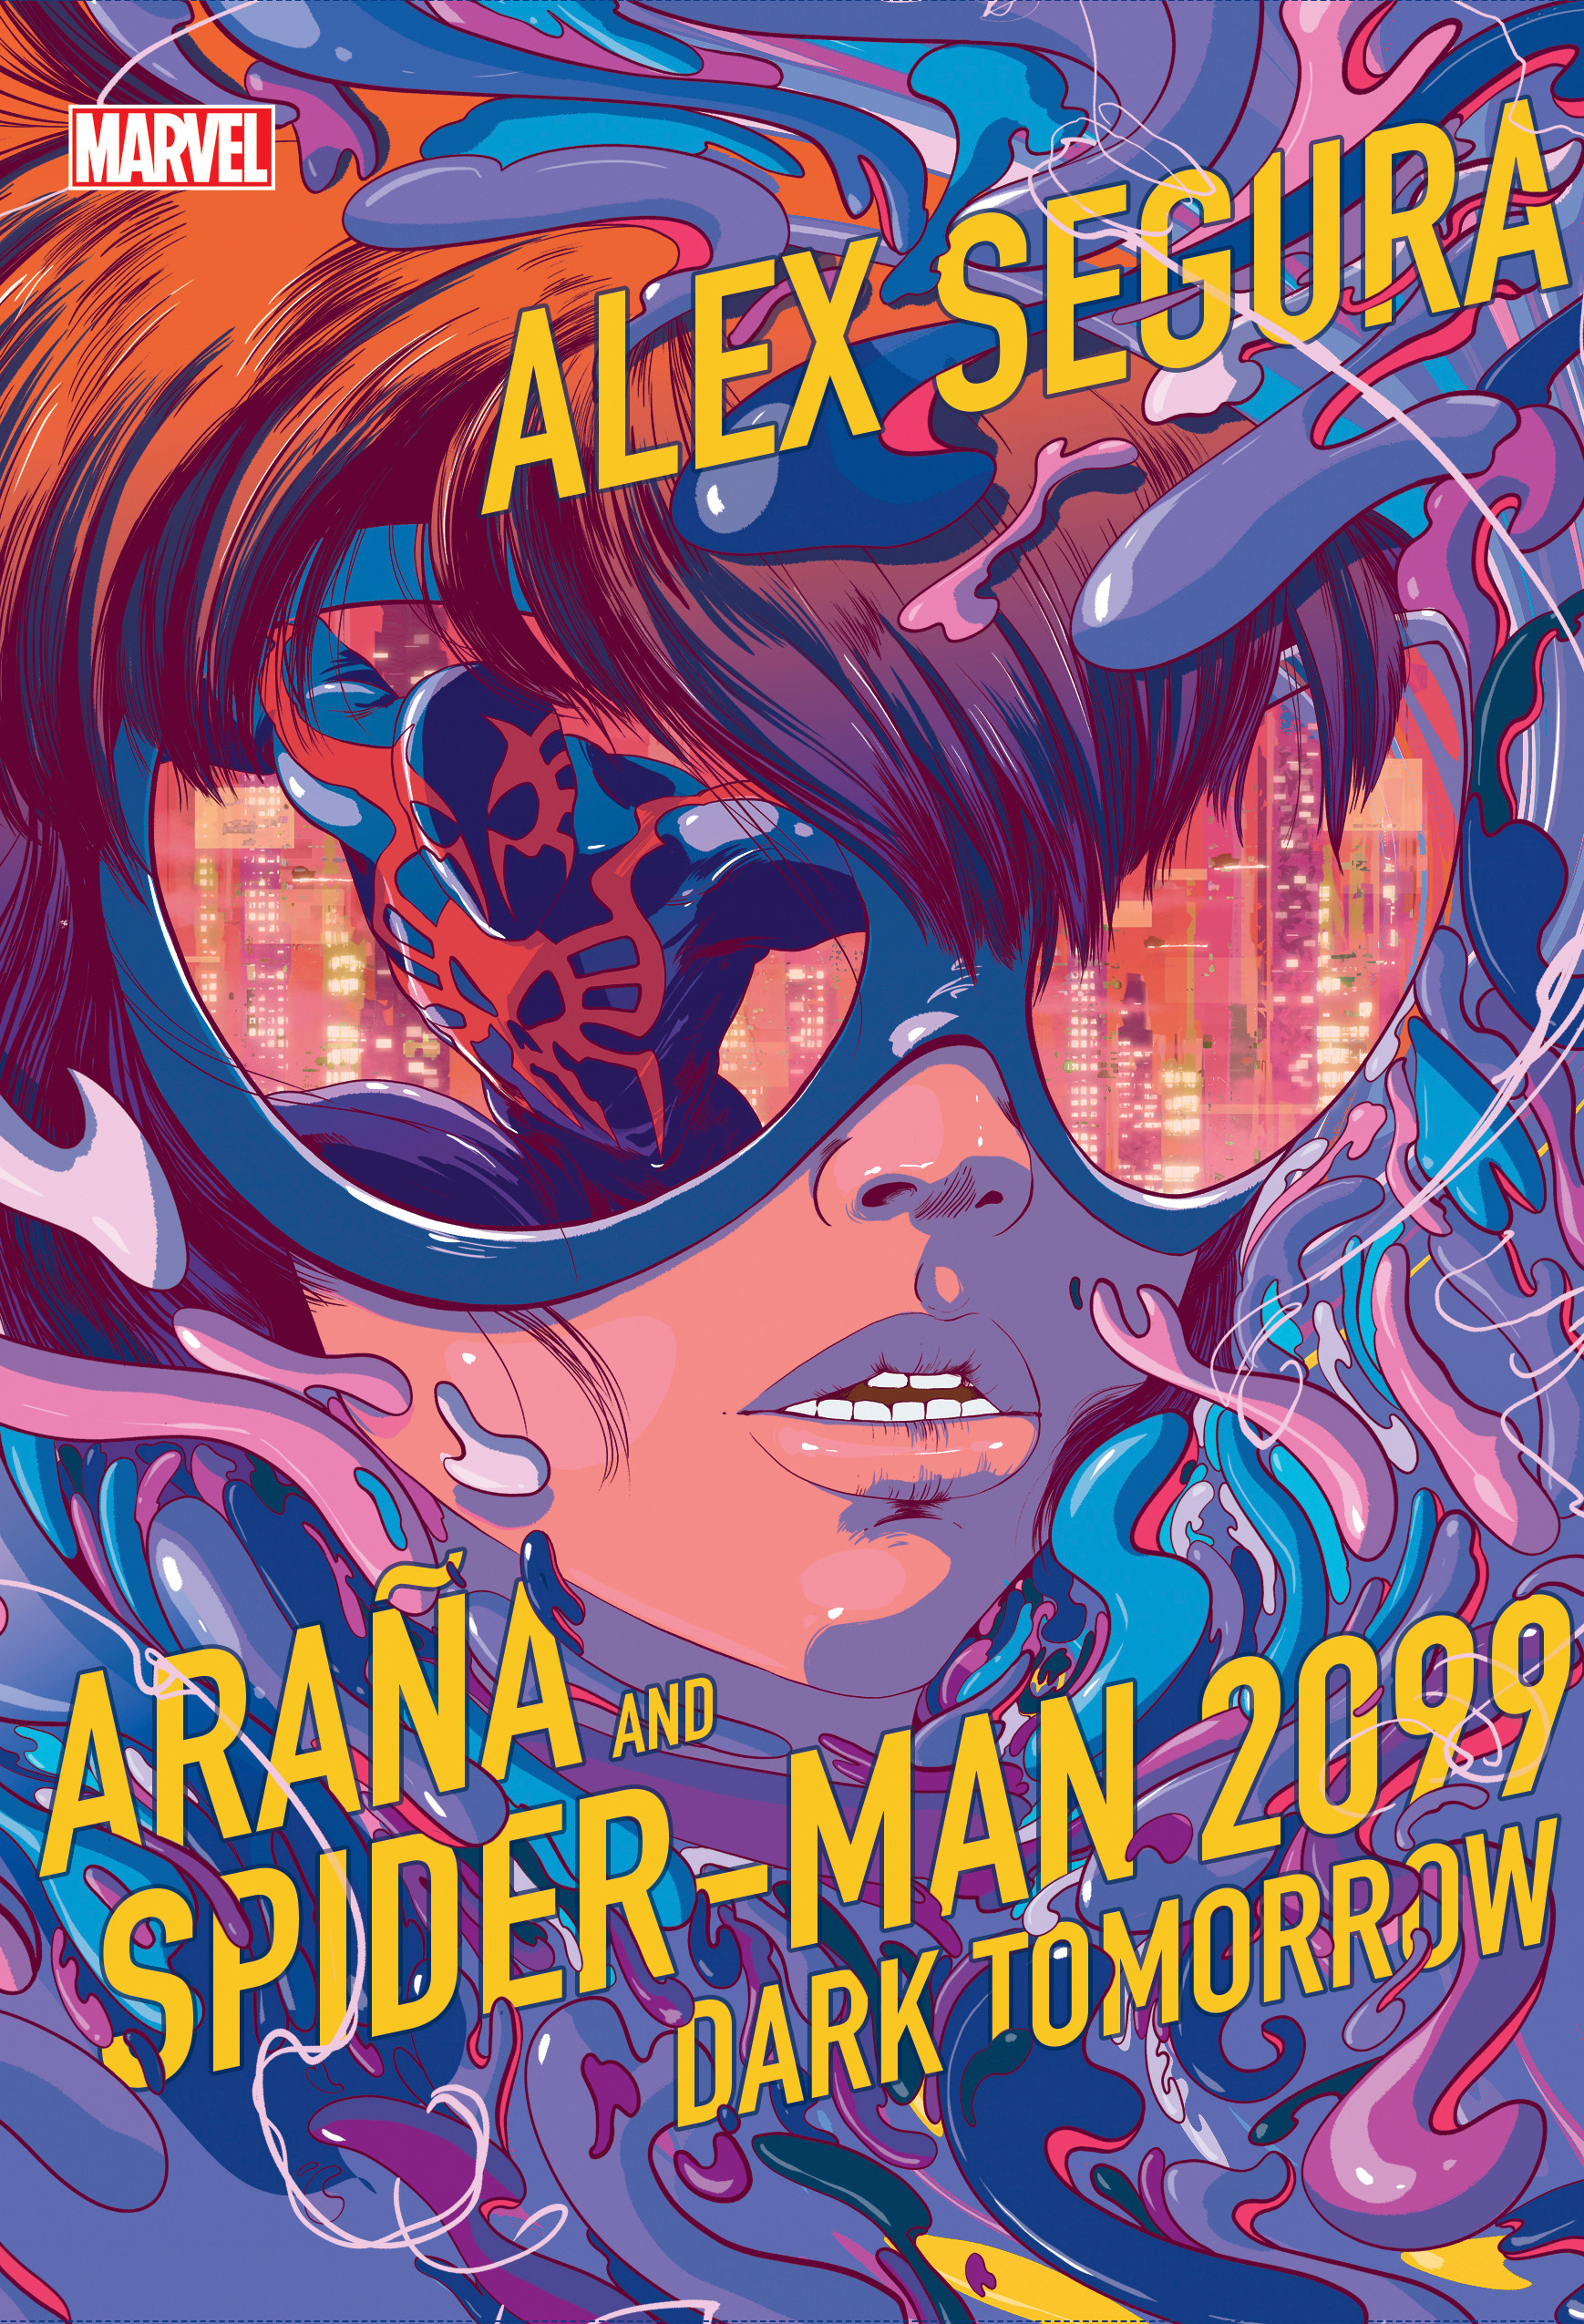 Araña and Spider-Man 2099: Dark Tomorrow | Segura, Alex